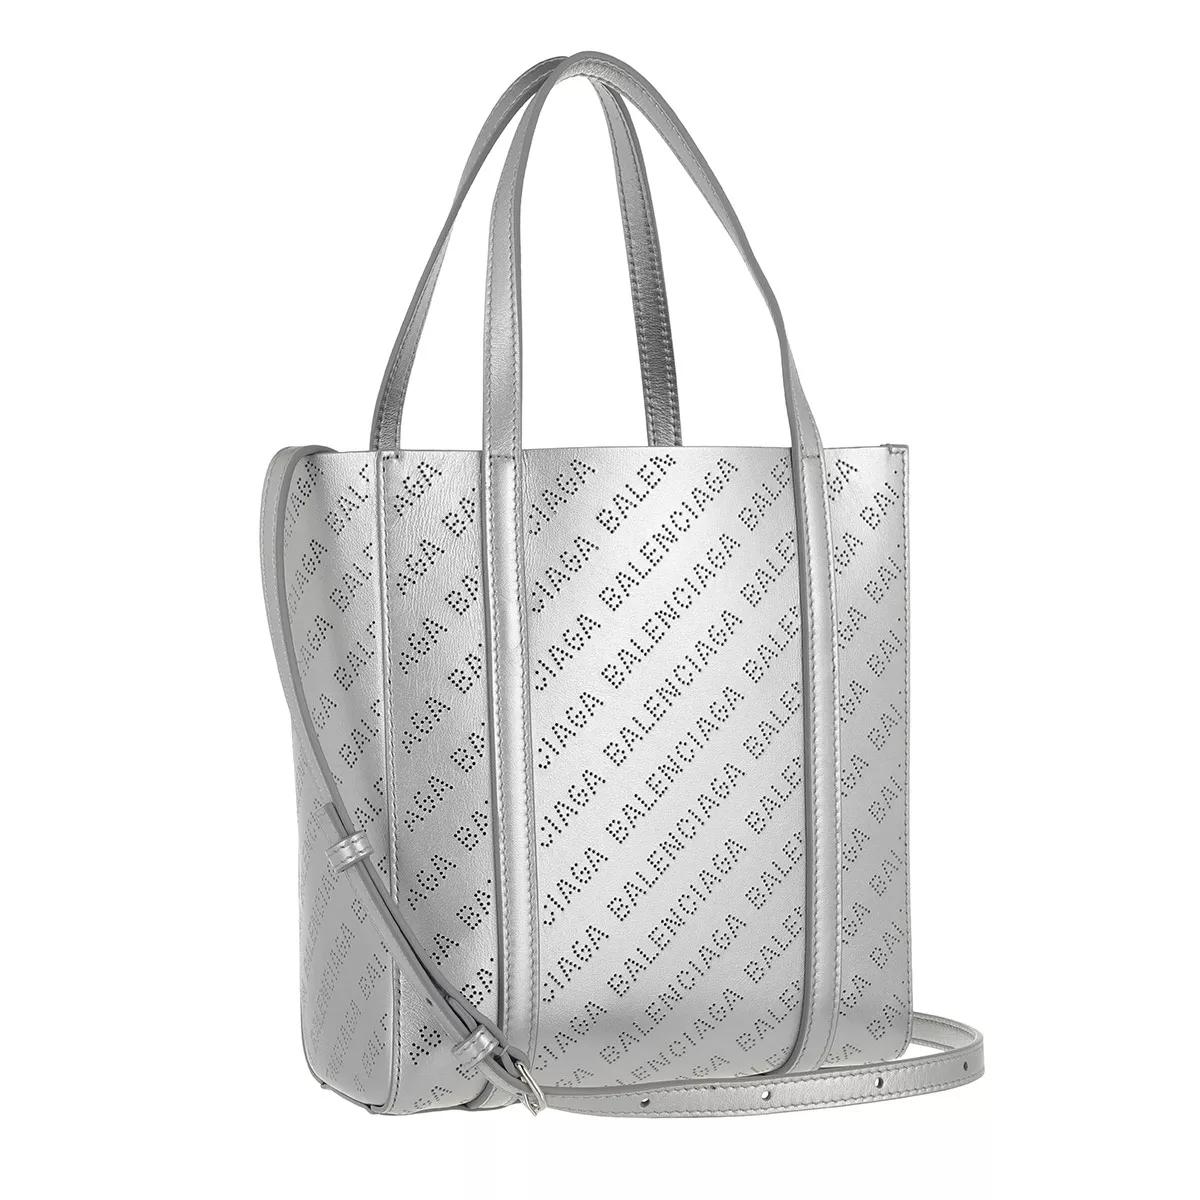 Balenciaga Totes Everyday Tote Bag in zilver